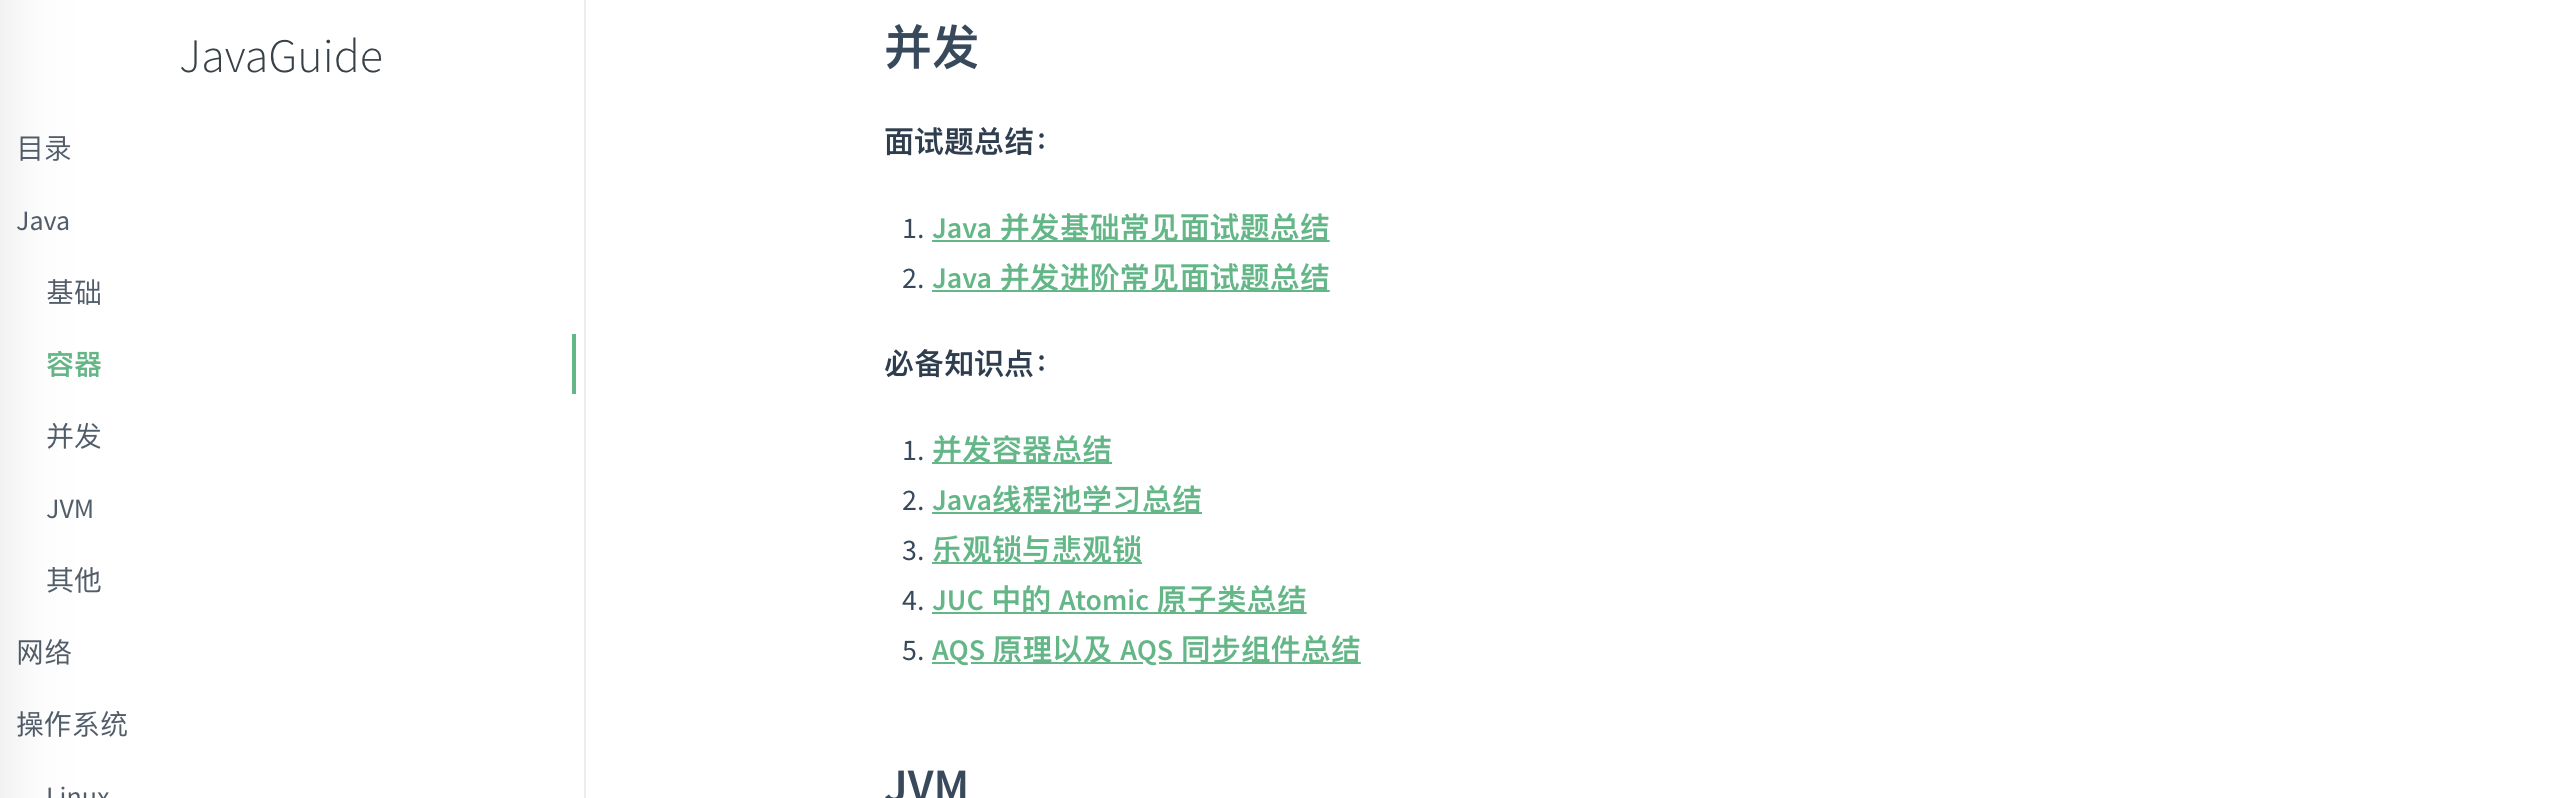 docs/java/Multithread/images/多线程学习指南/javaguide-并发.png